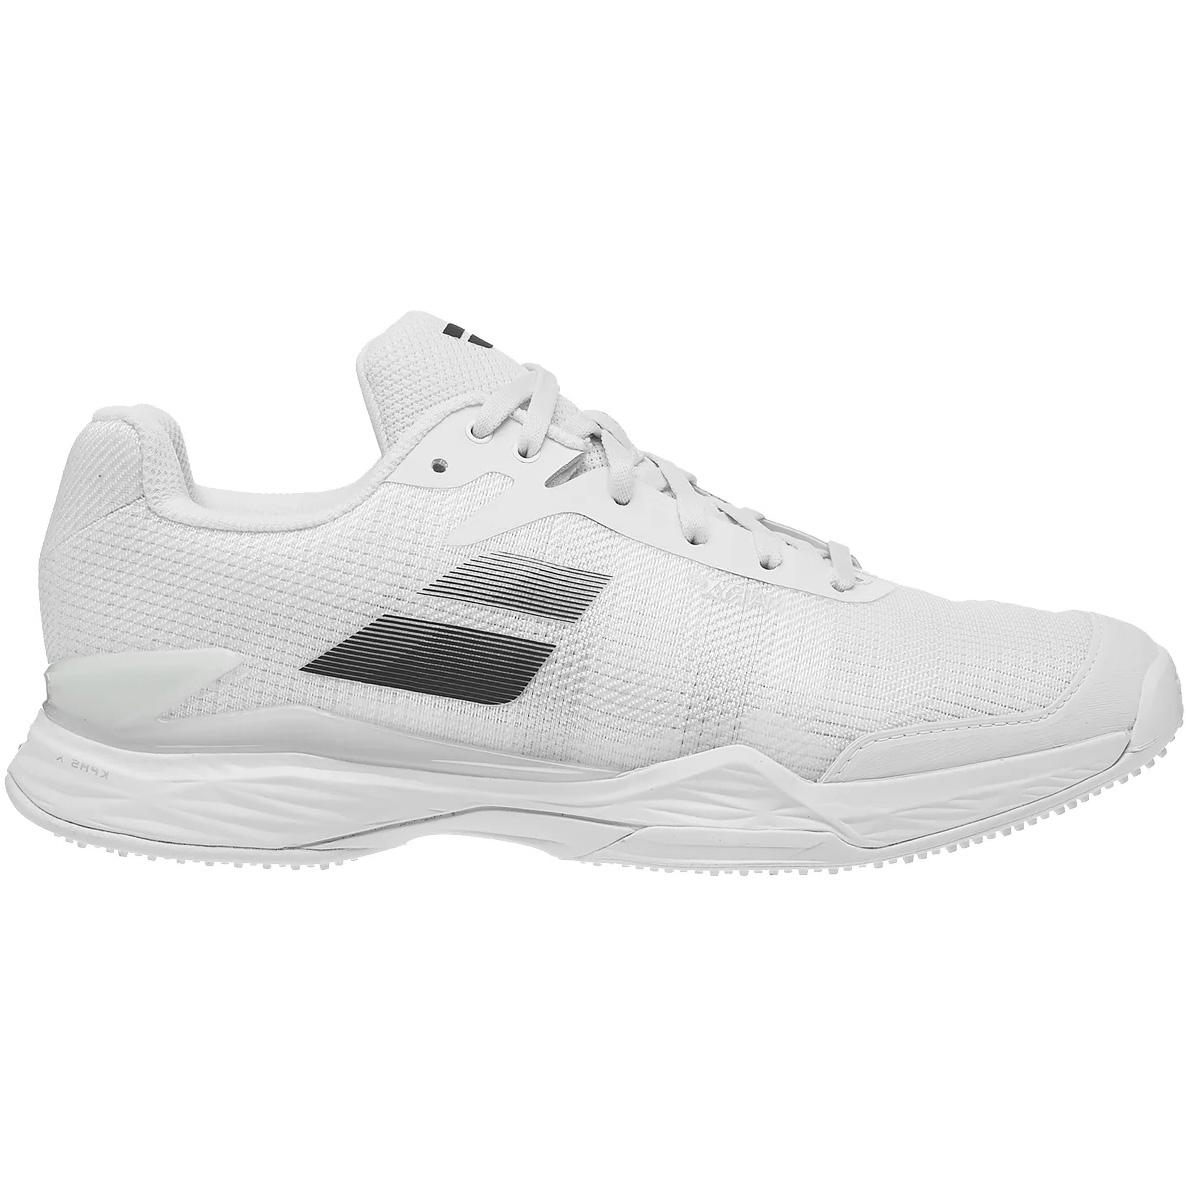 Babolat Mens Jet Mach II Grass Tennis Shoes - White - Tennisnuts.com